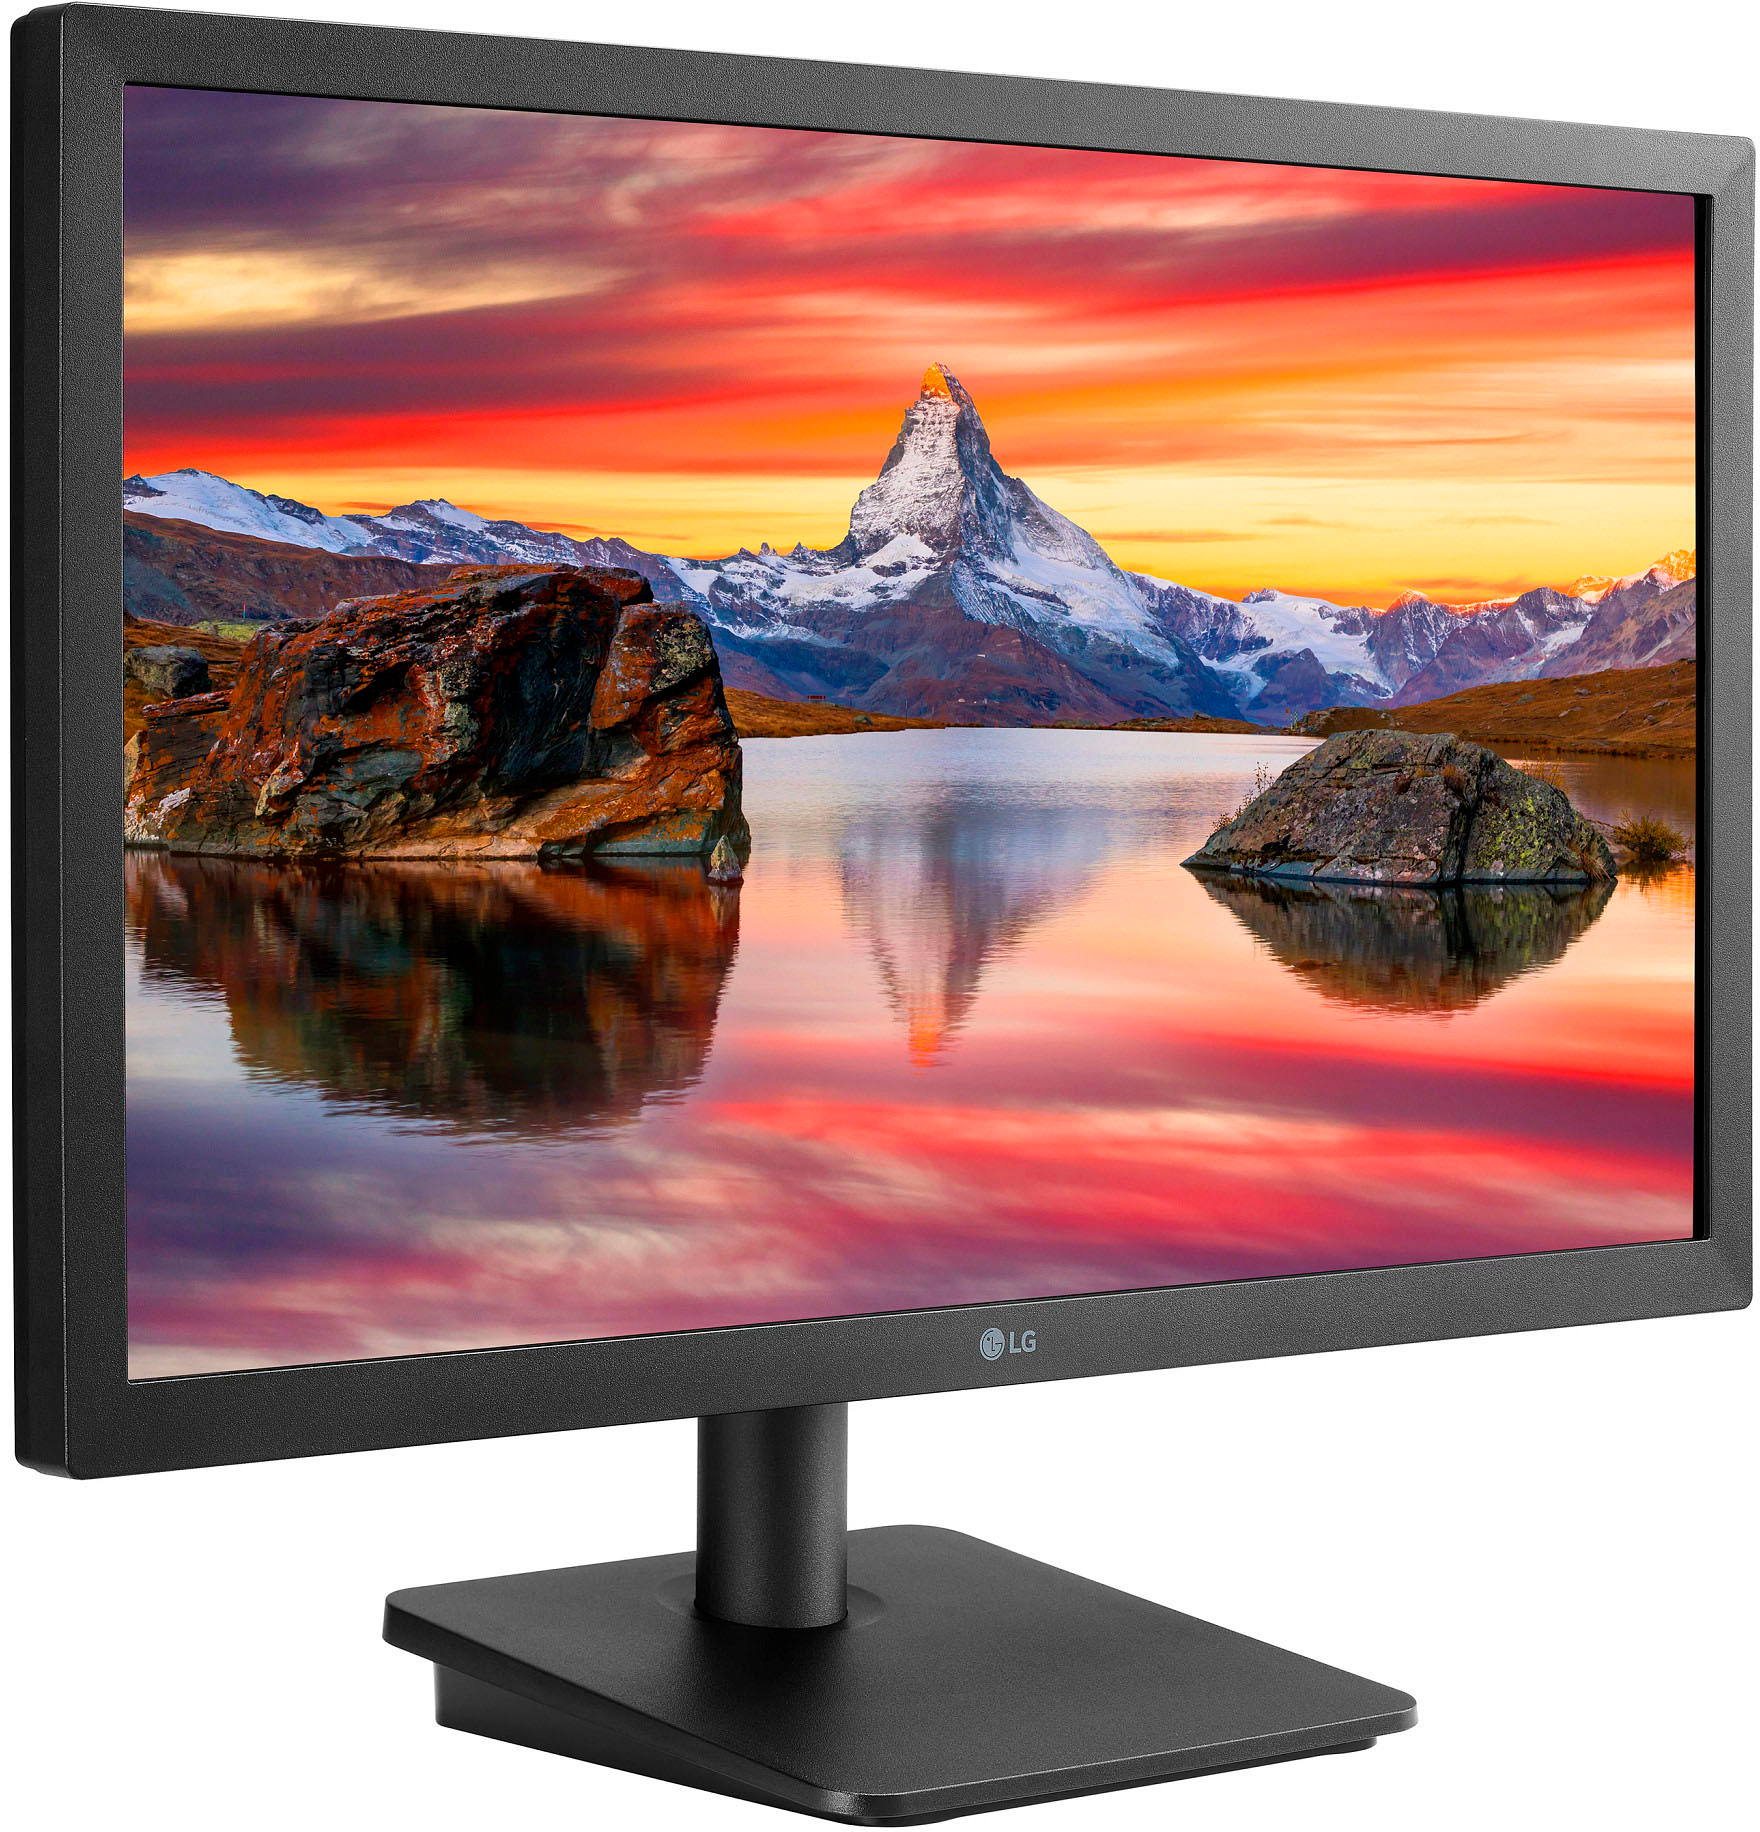 Best Buy: LG 22” LED FHD Monitor Black 22MP400-B